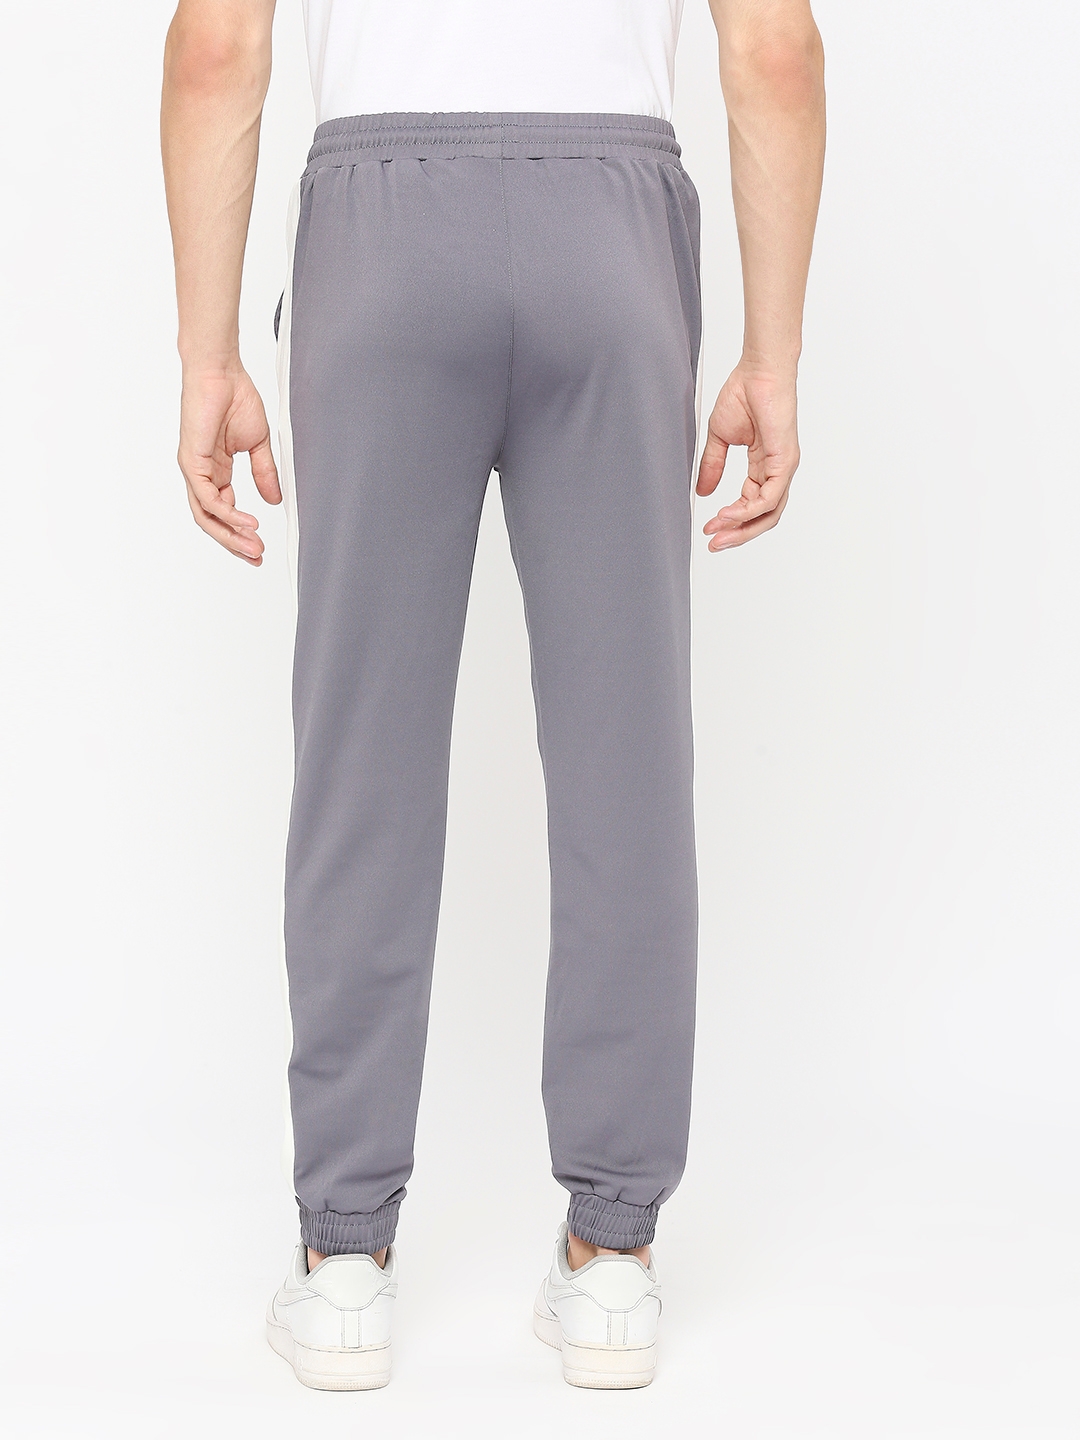 FITZ | Men's Slim Fit Grey Cotton Blend Casual Joogers 3